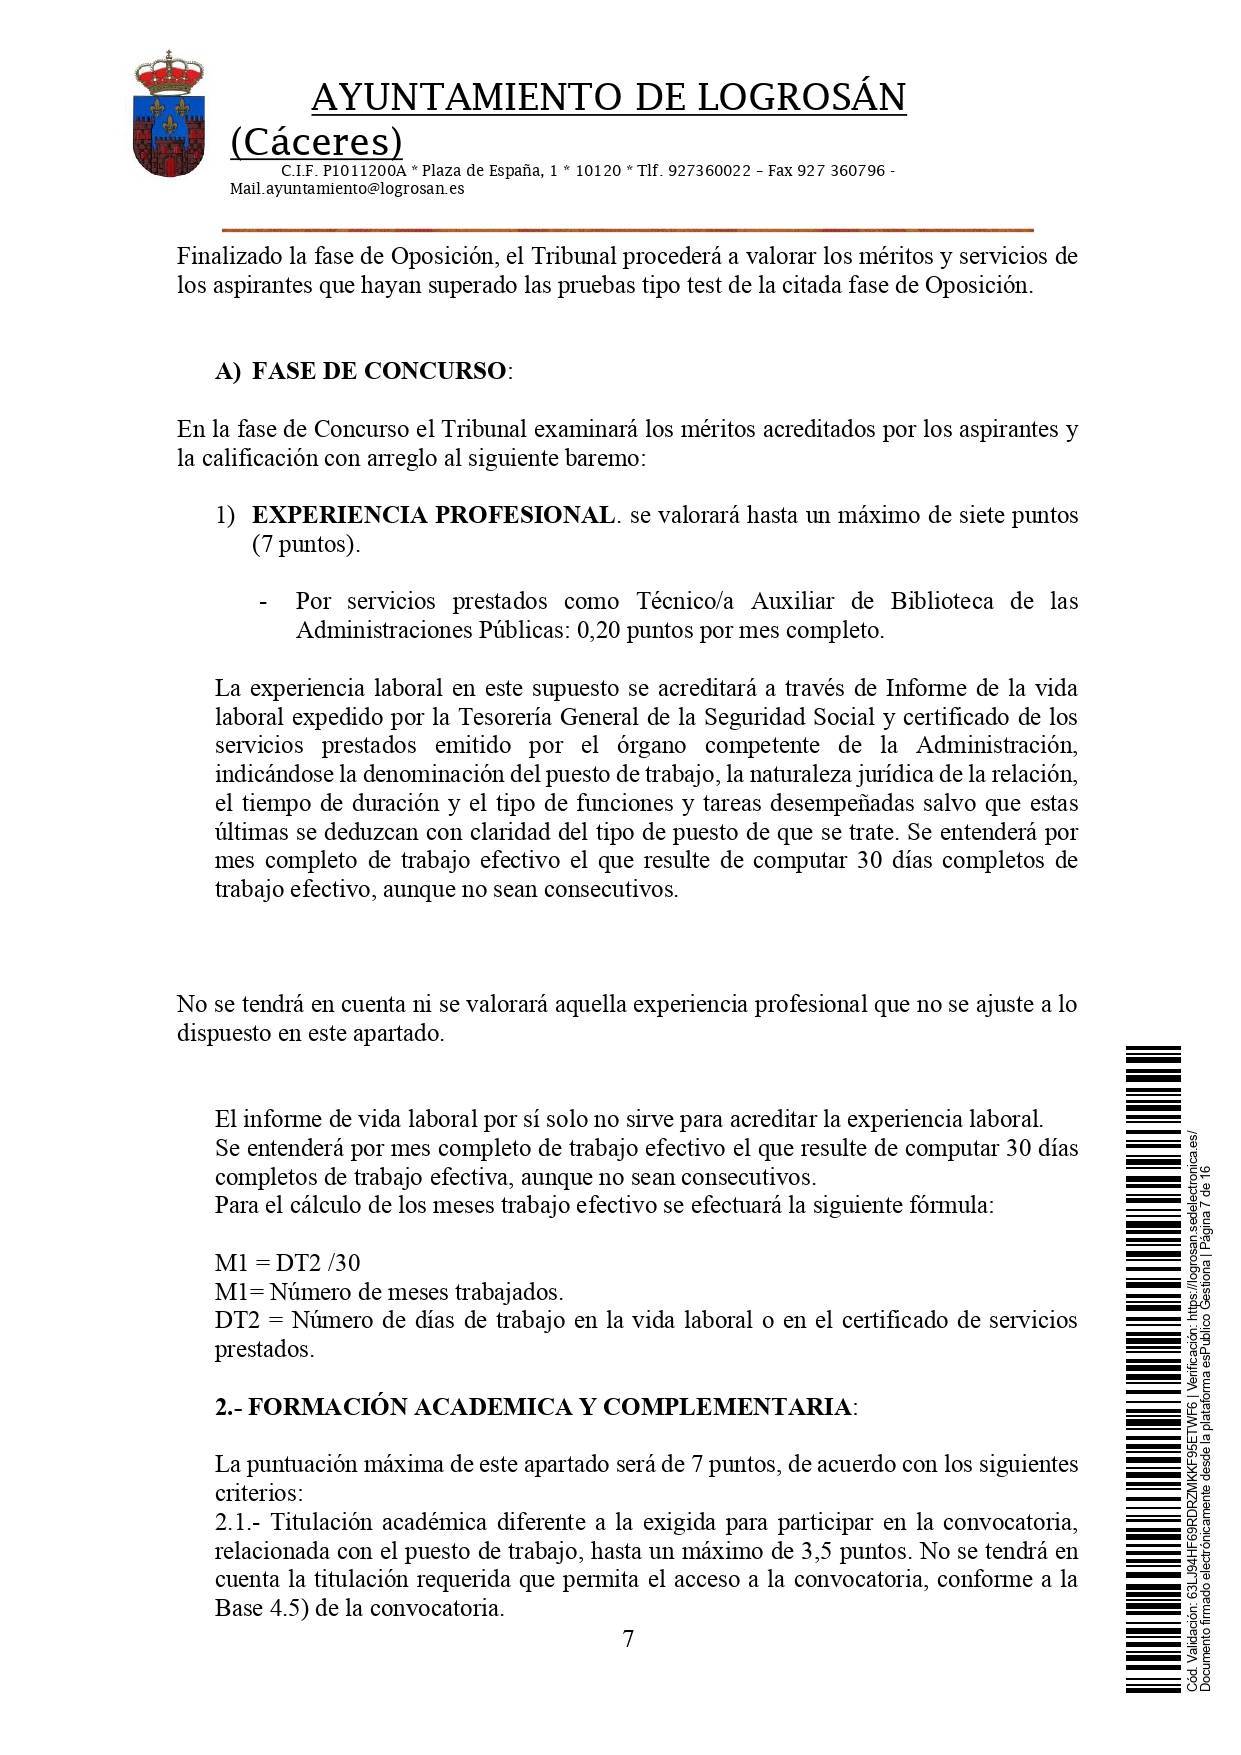 Técnicos-as auxiliar de biblioteca y dinamizador-a cultural (2021) - Logrosán (Cáceres) 7